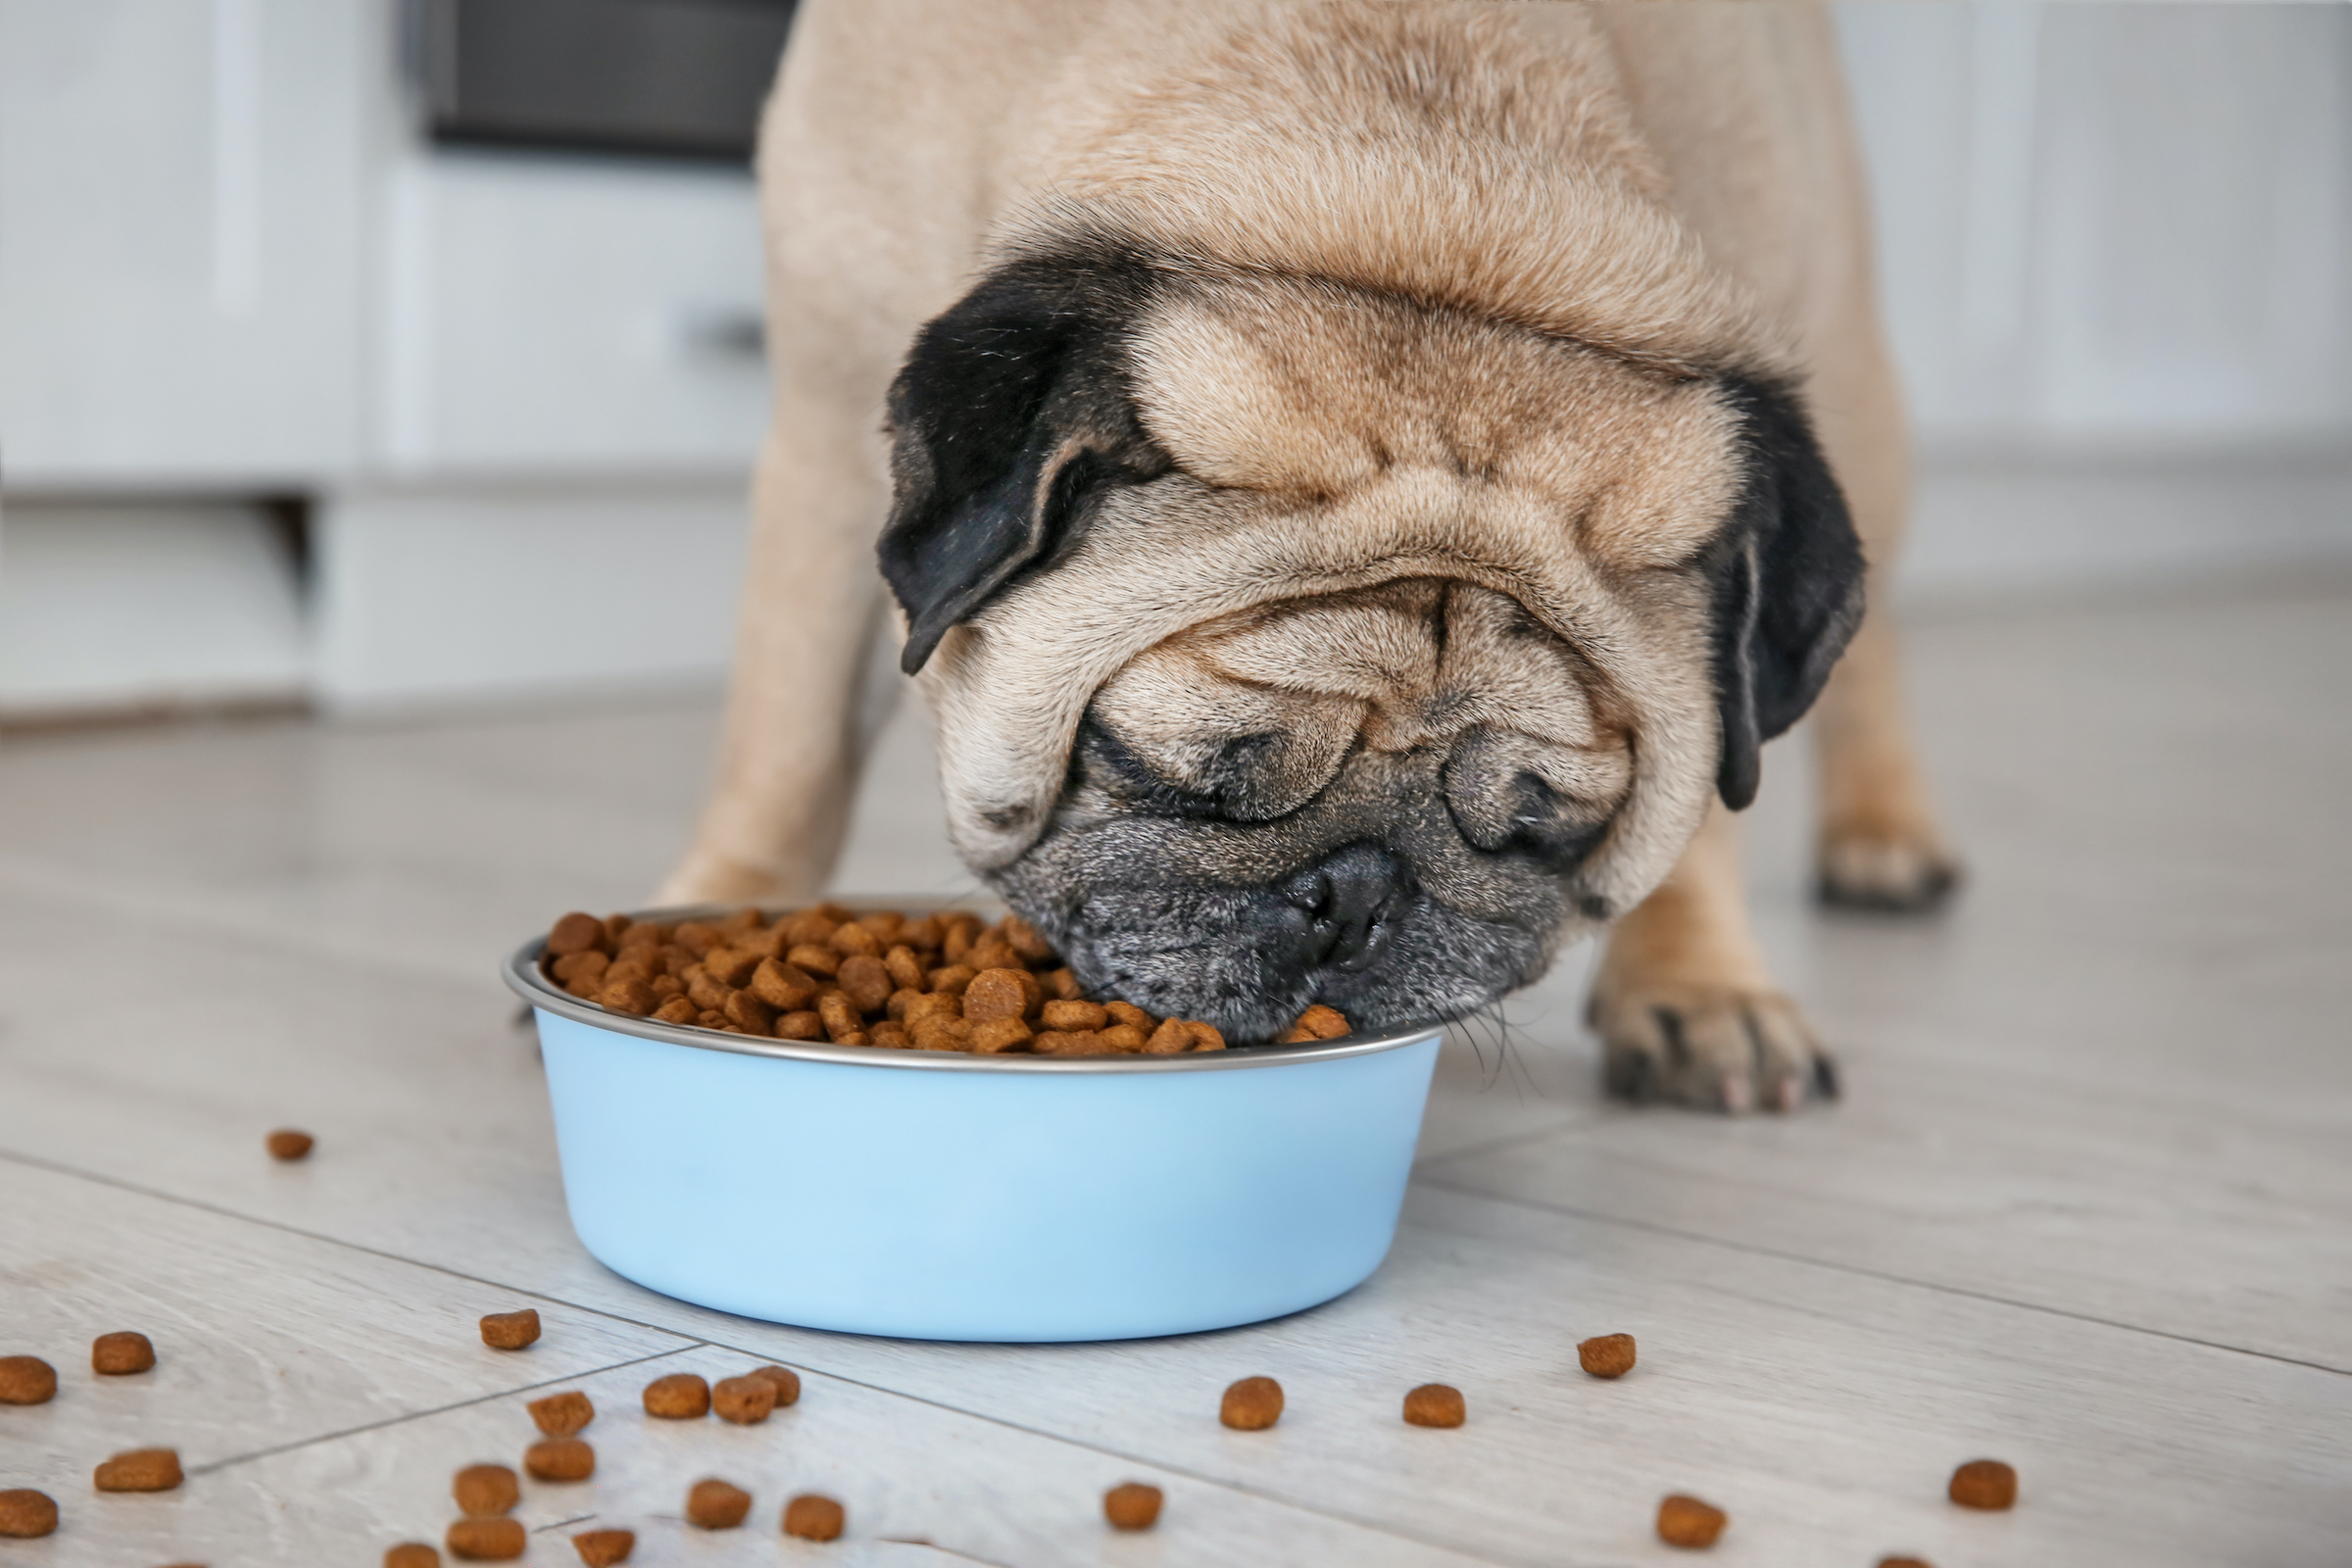 A pug eats kibble from a blue dog bowl